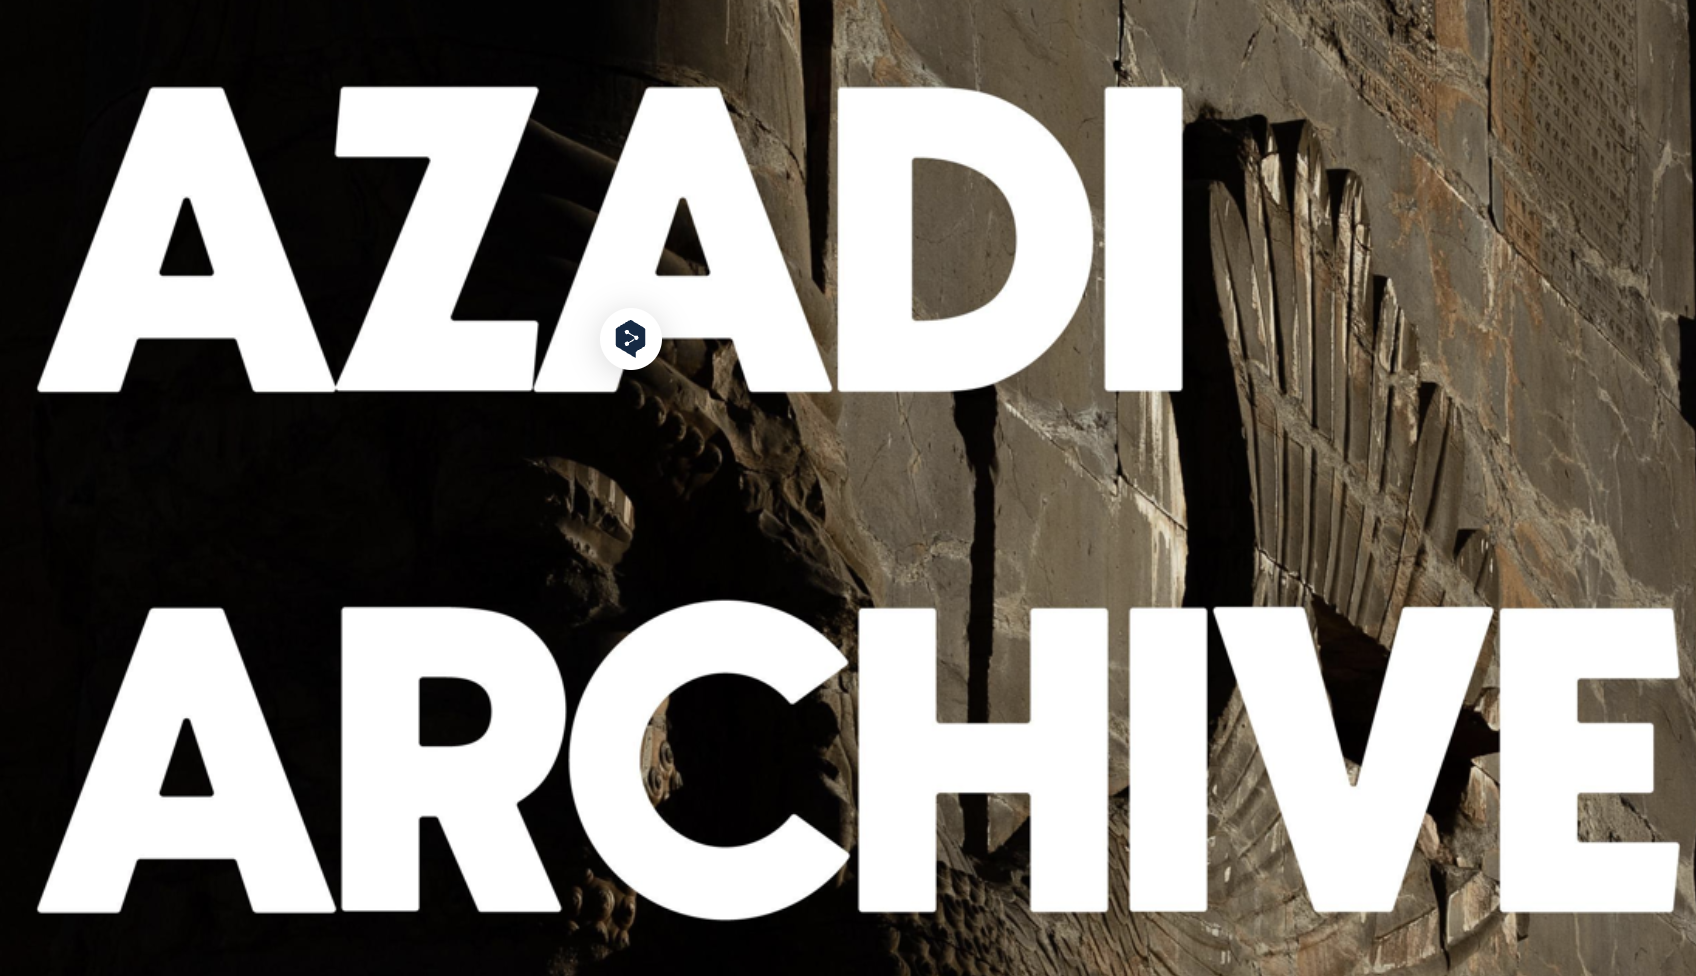 Azadi Archive